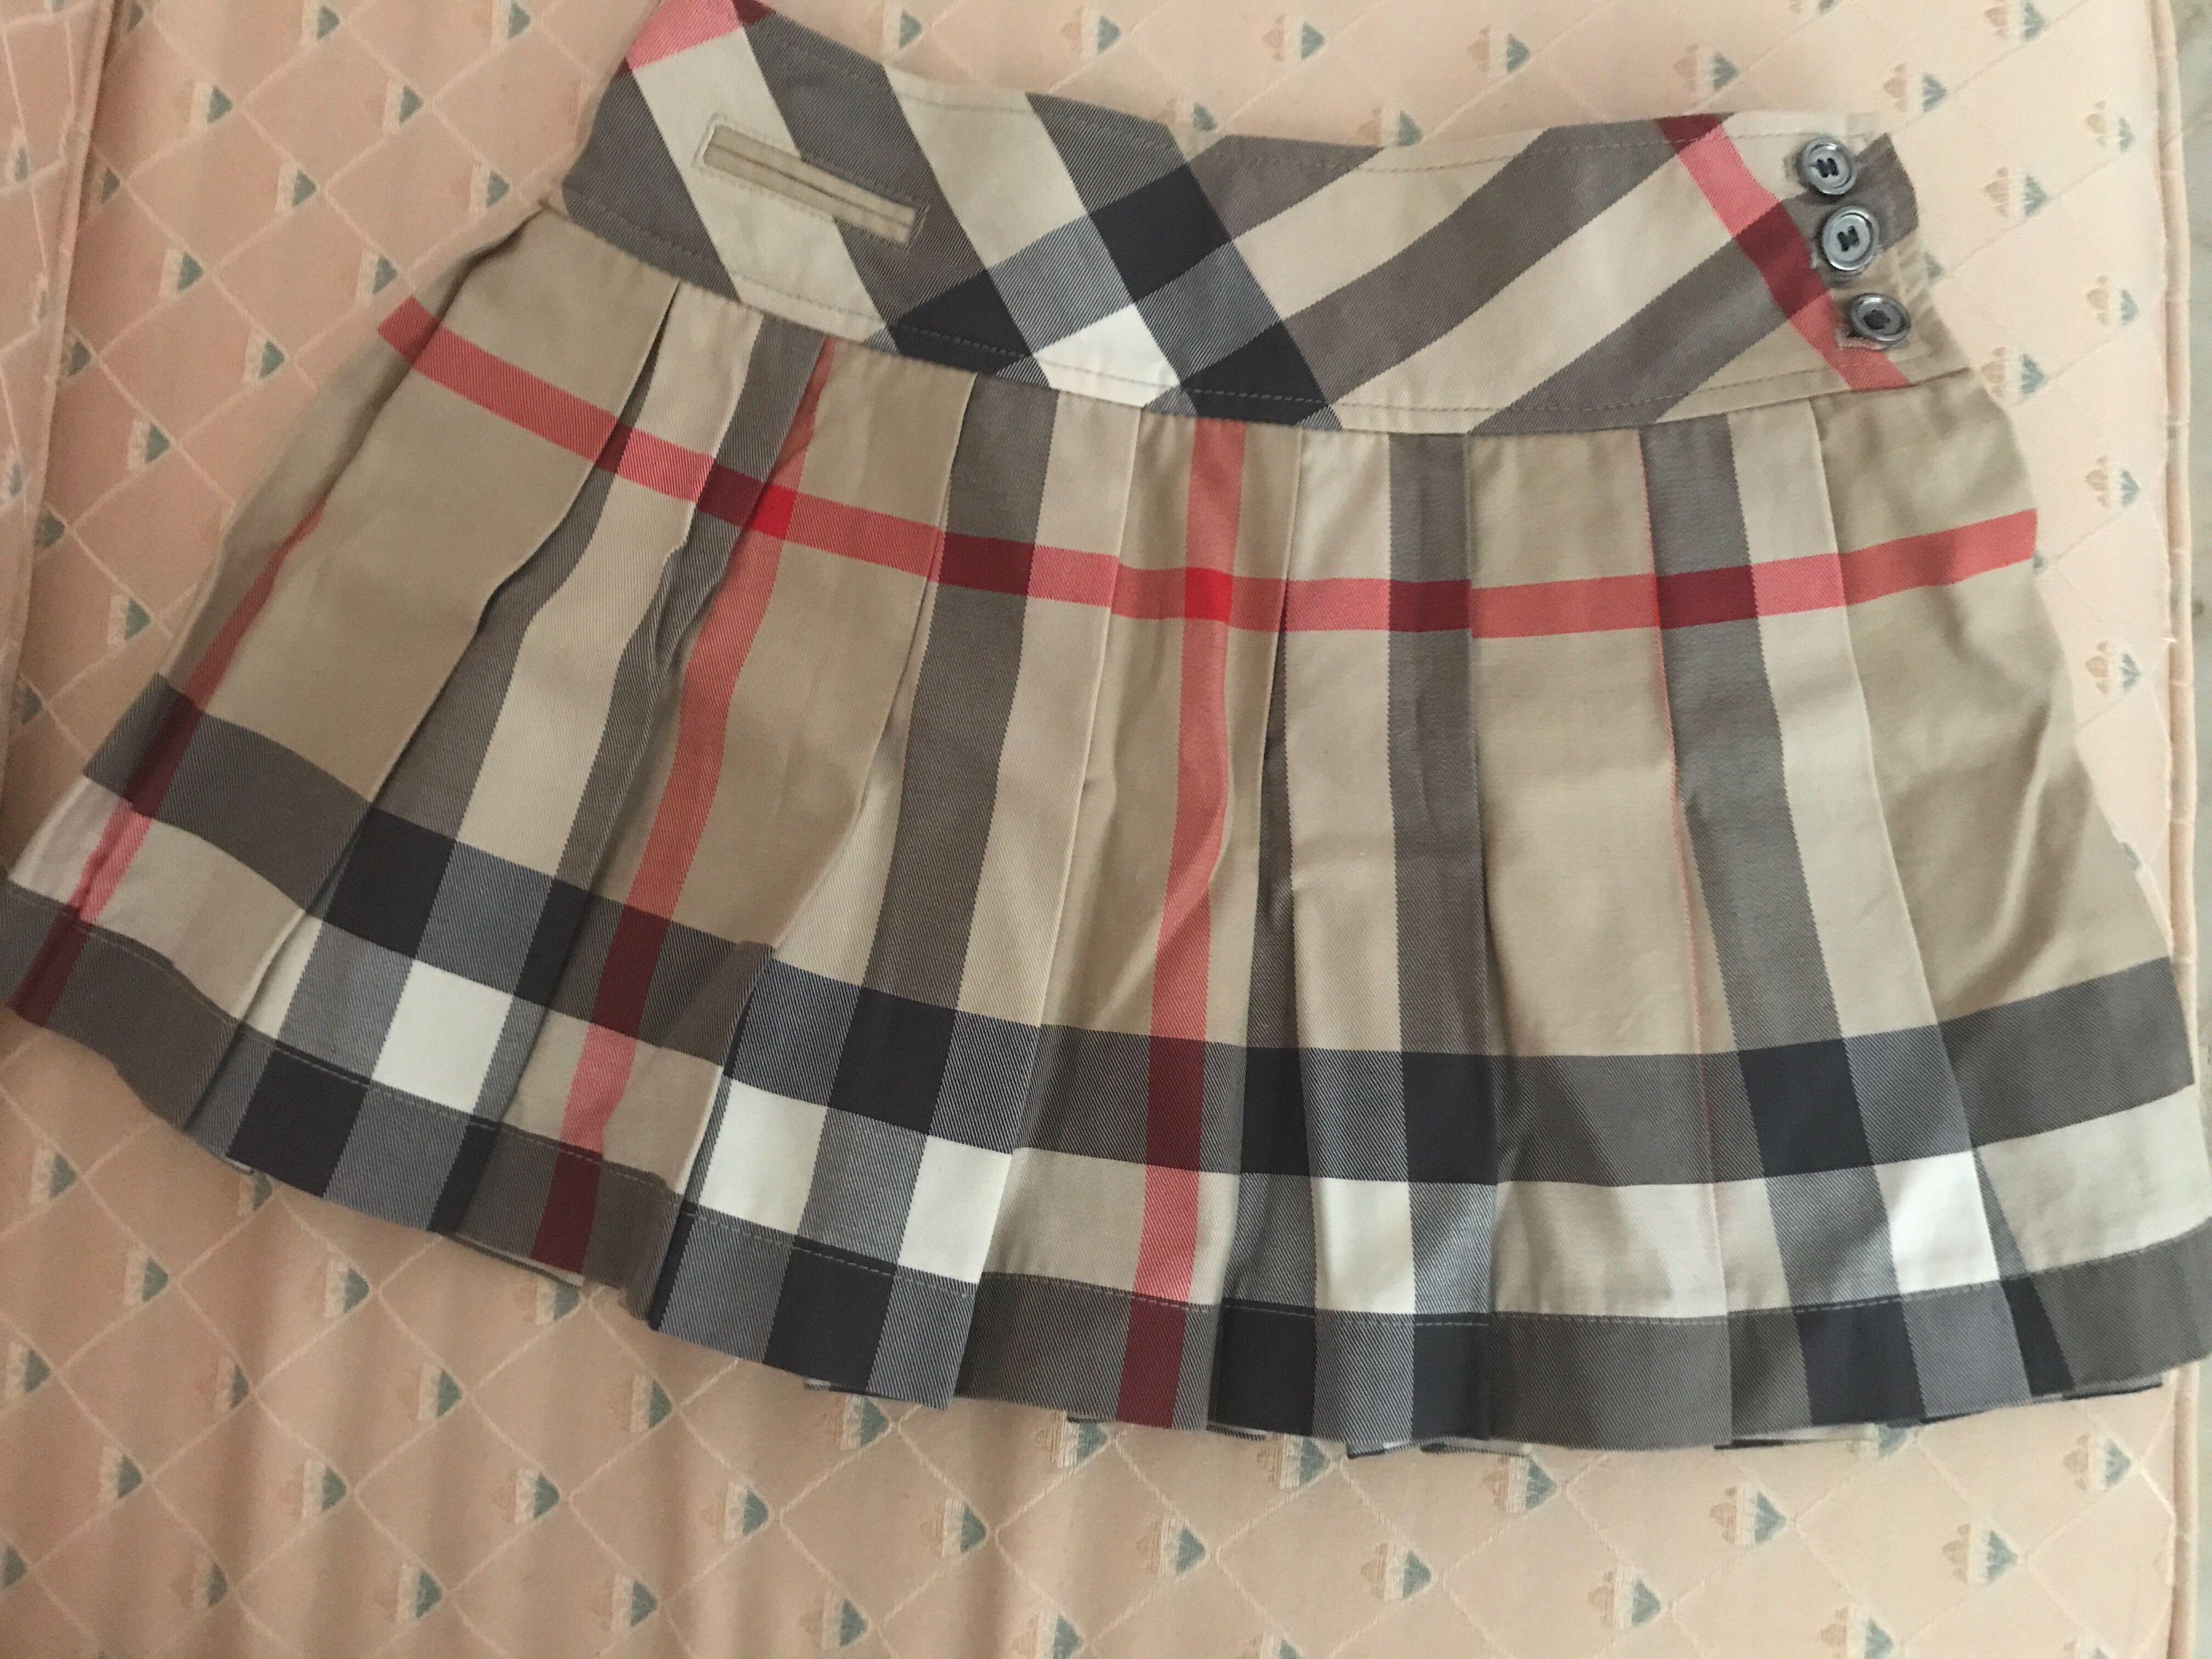 burberry skirt price